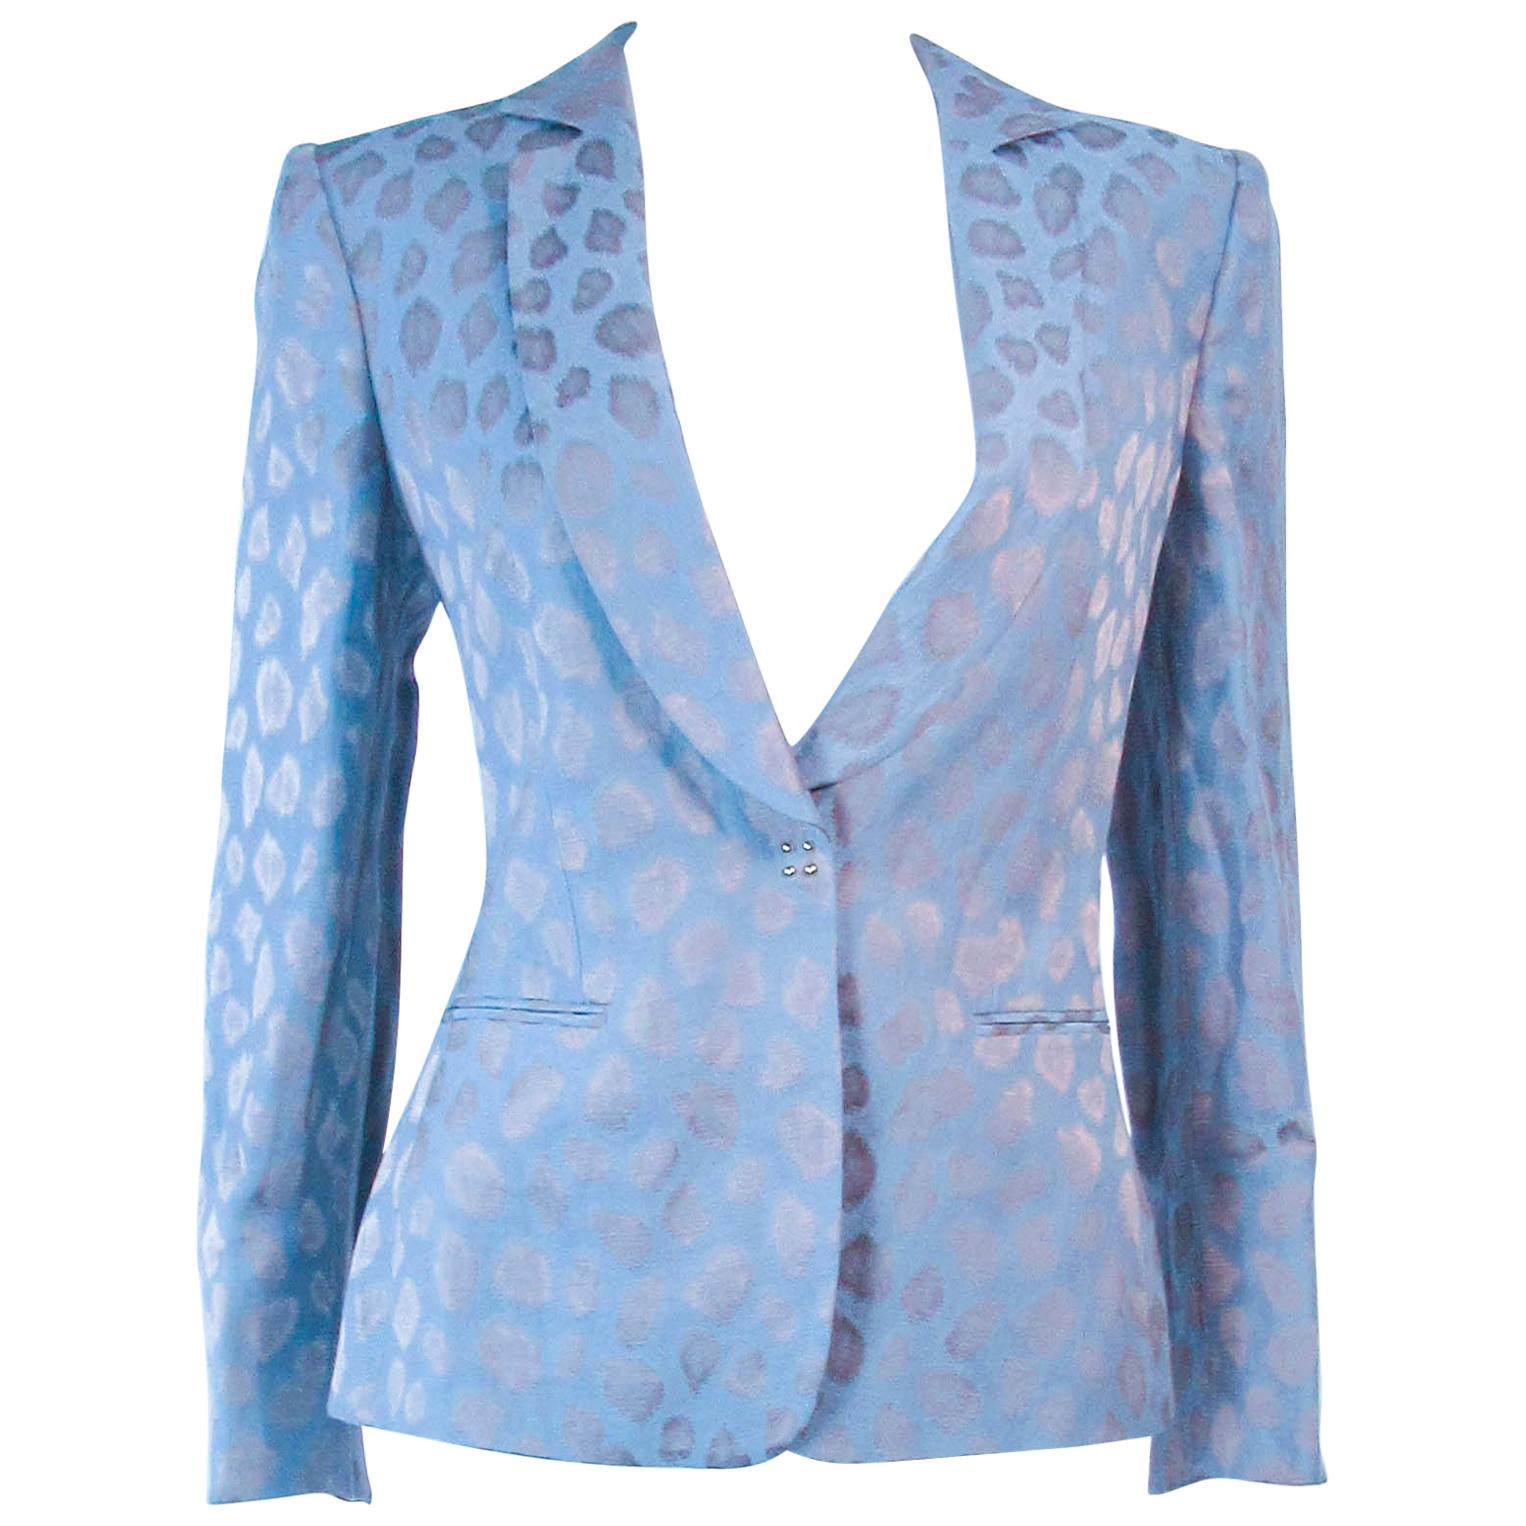 GIORGIO ARMANI Blue Animal Pattern Silk Jacket with Gold Studs Size 42 